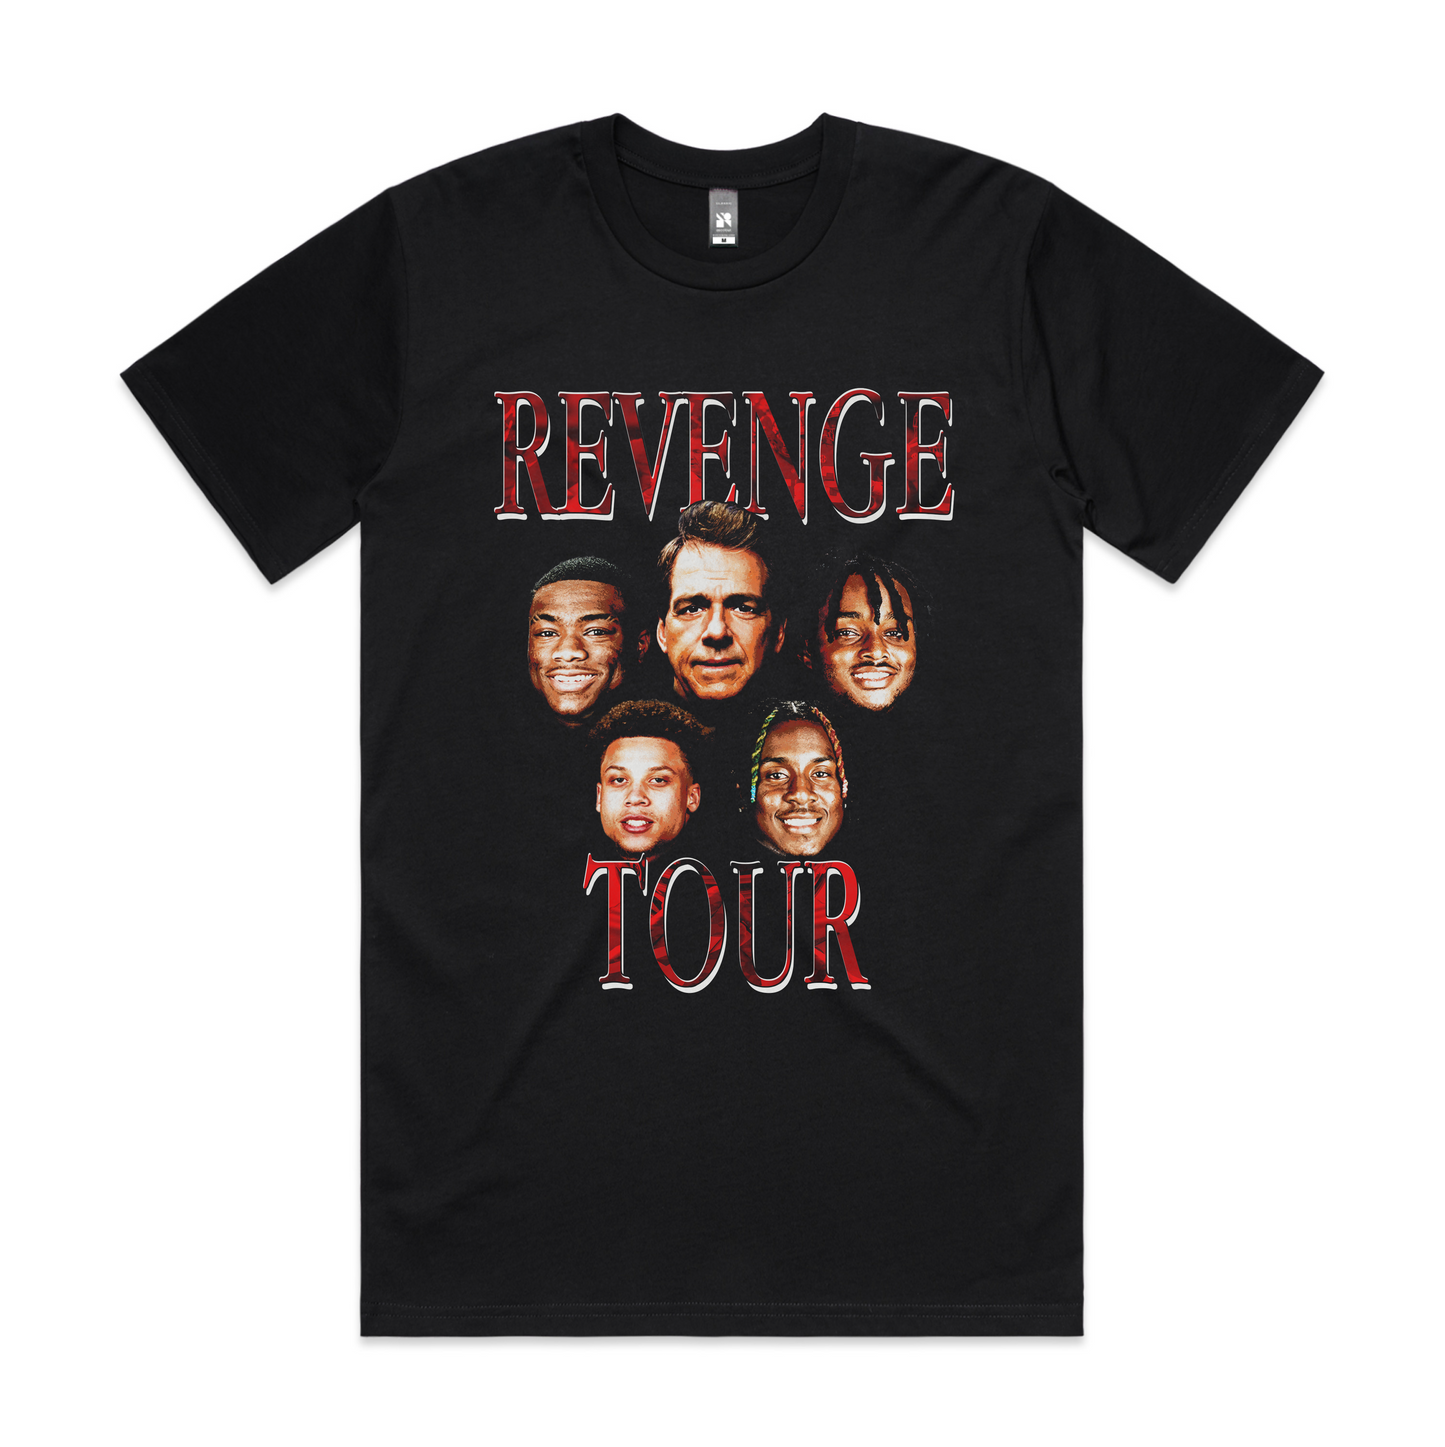 'Revenge Tour' S/S Tee